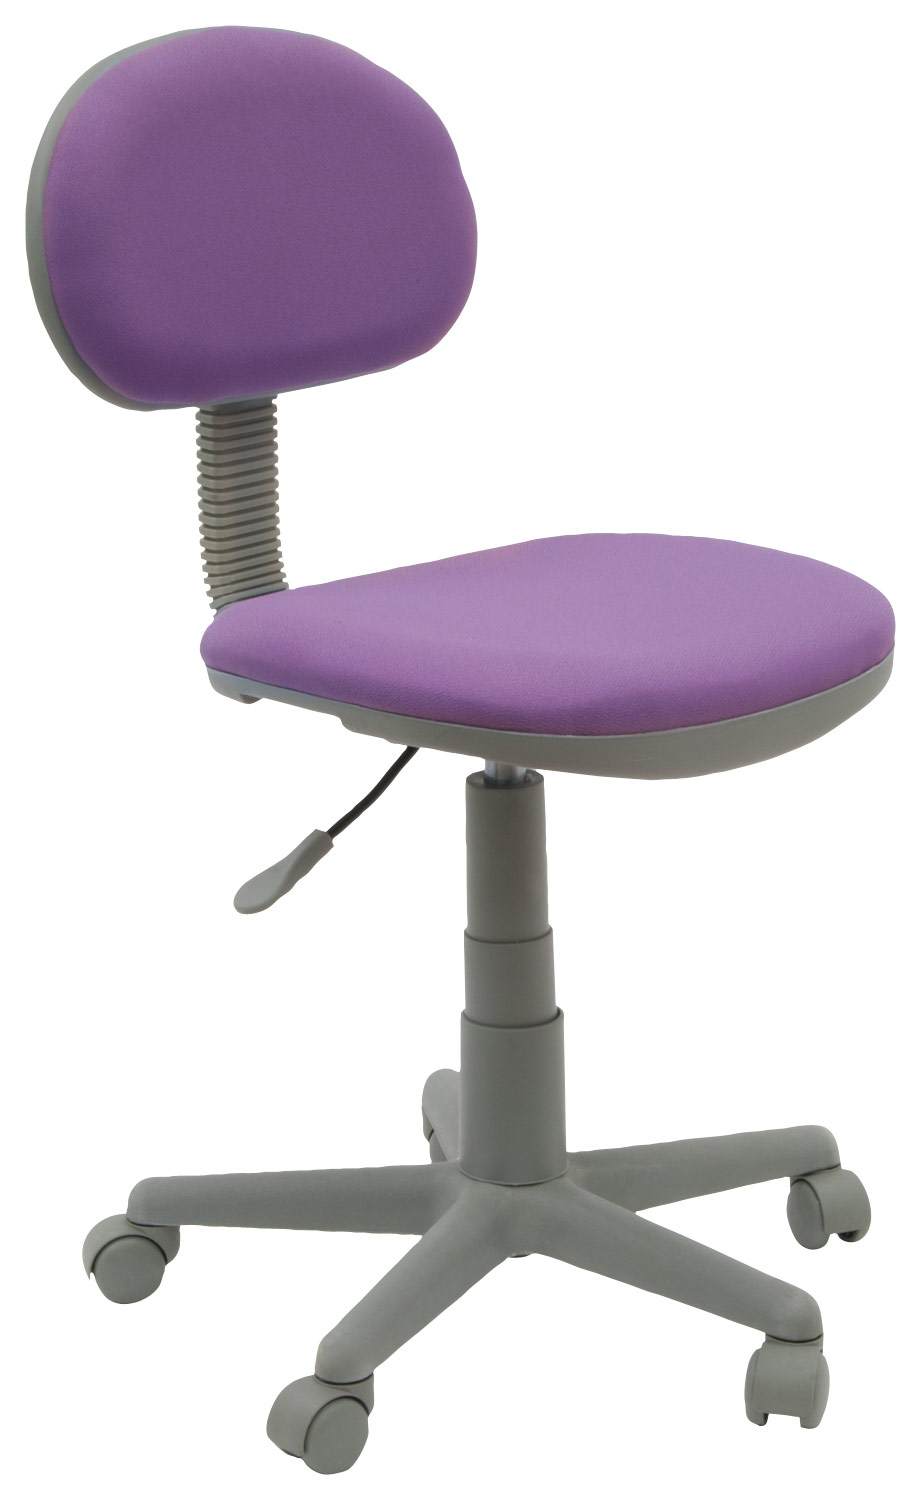 Studio Designs - Deluxe Task Chair - Purple/Gray